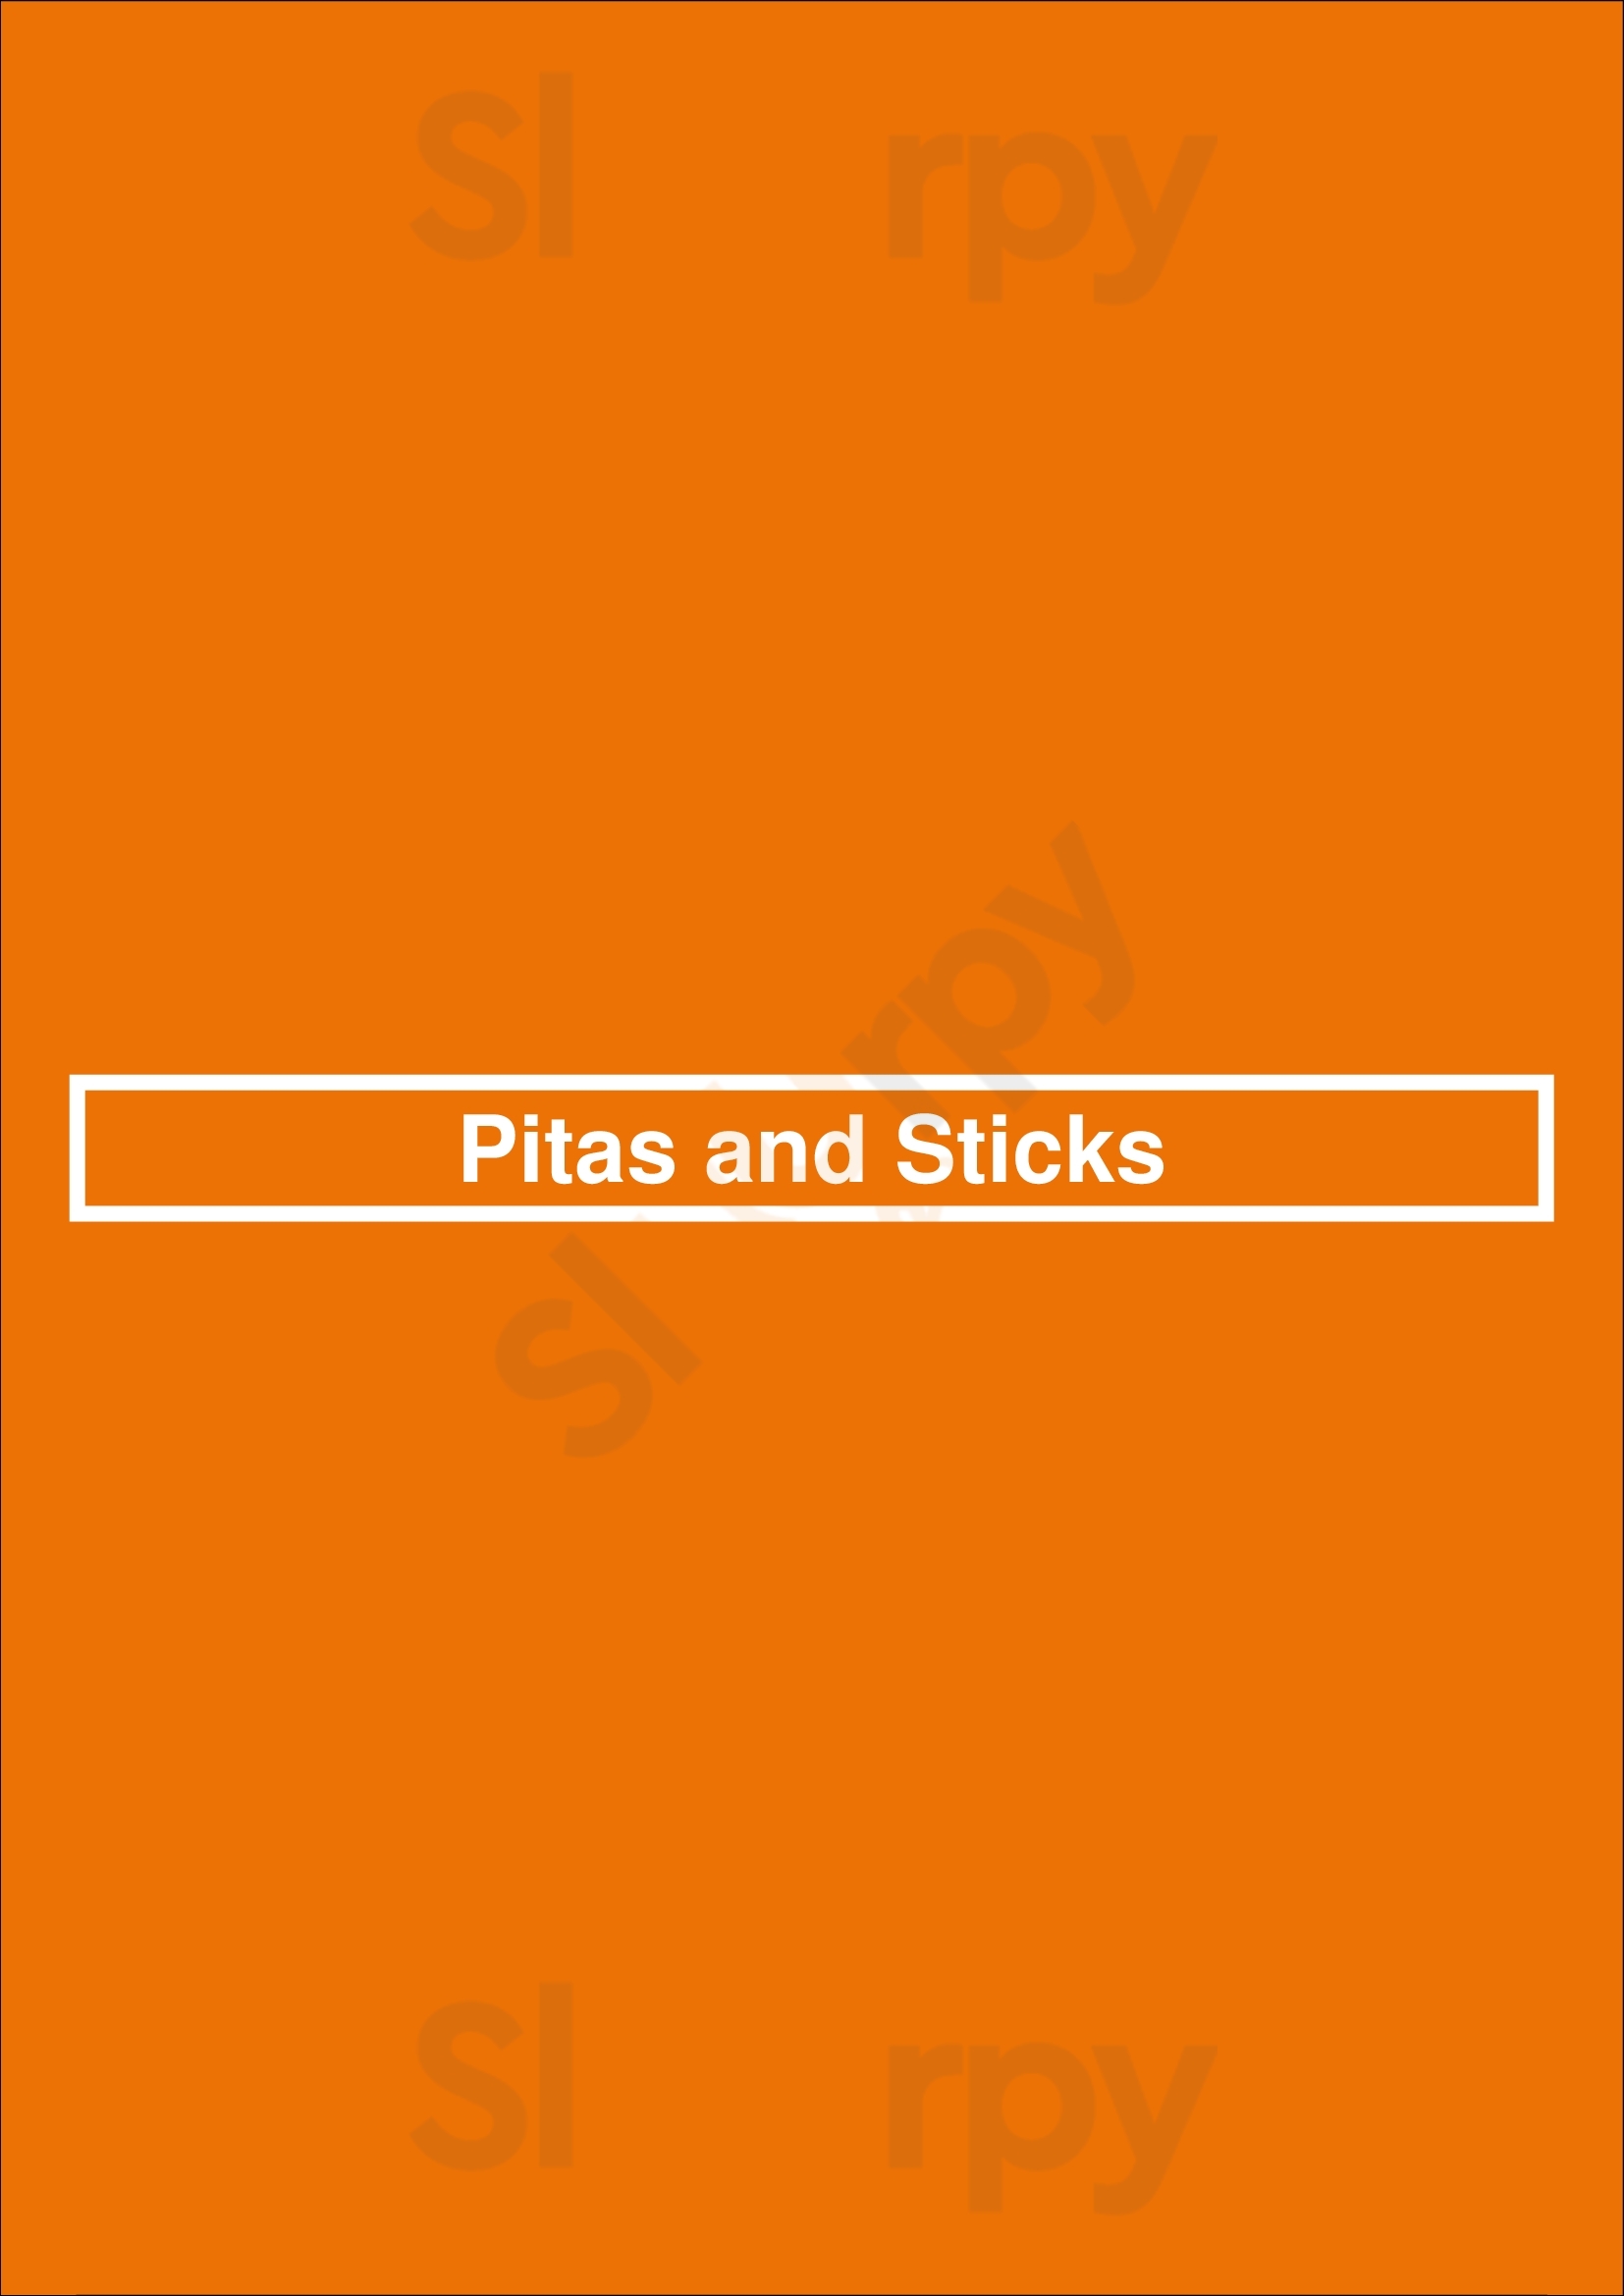 Pitas And Sticks Brooklyn Menu - 1